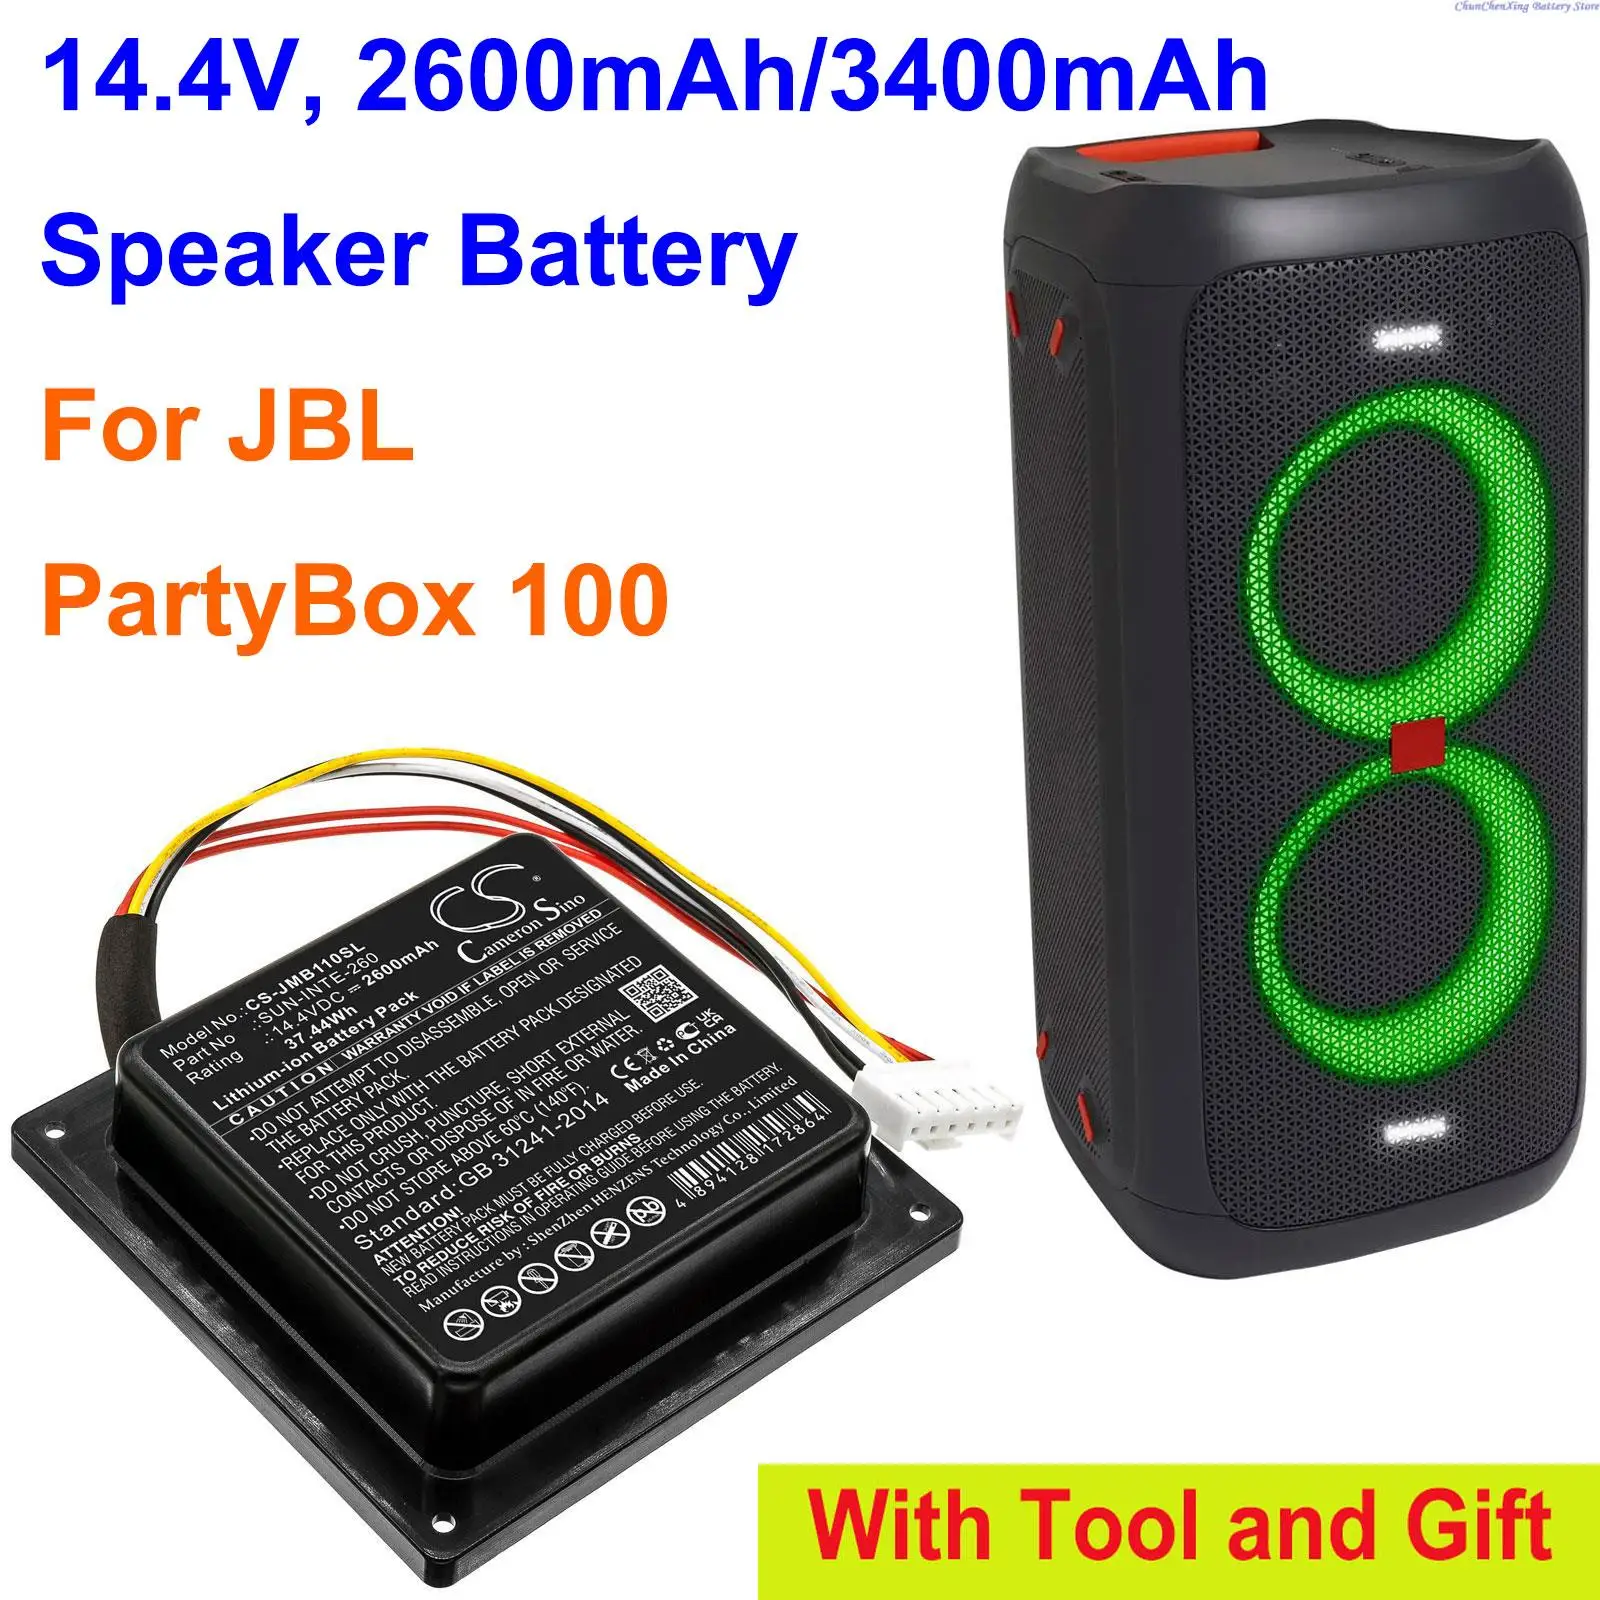 Cameron Sino 2600mAh/3400mAh Speaker Battery SUN-INTE-260 for JBL PartyBox 100